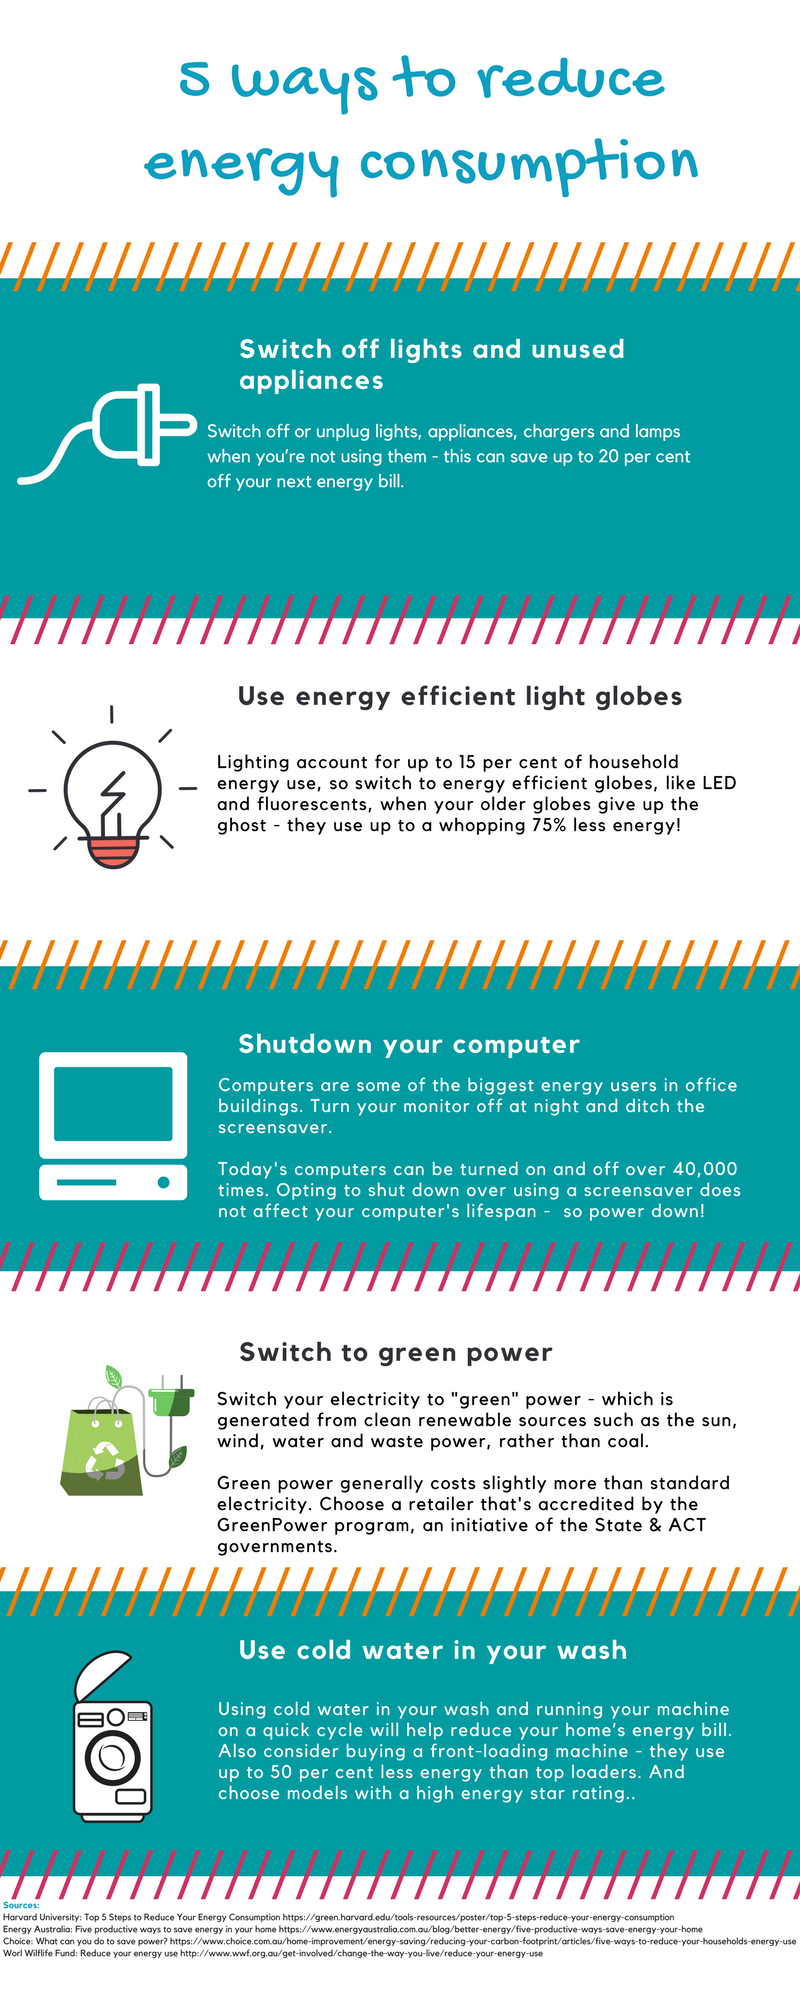 5 ways to reduce energy consumption